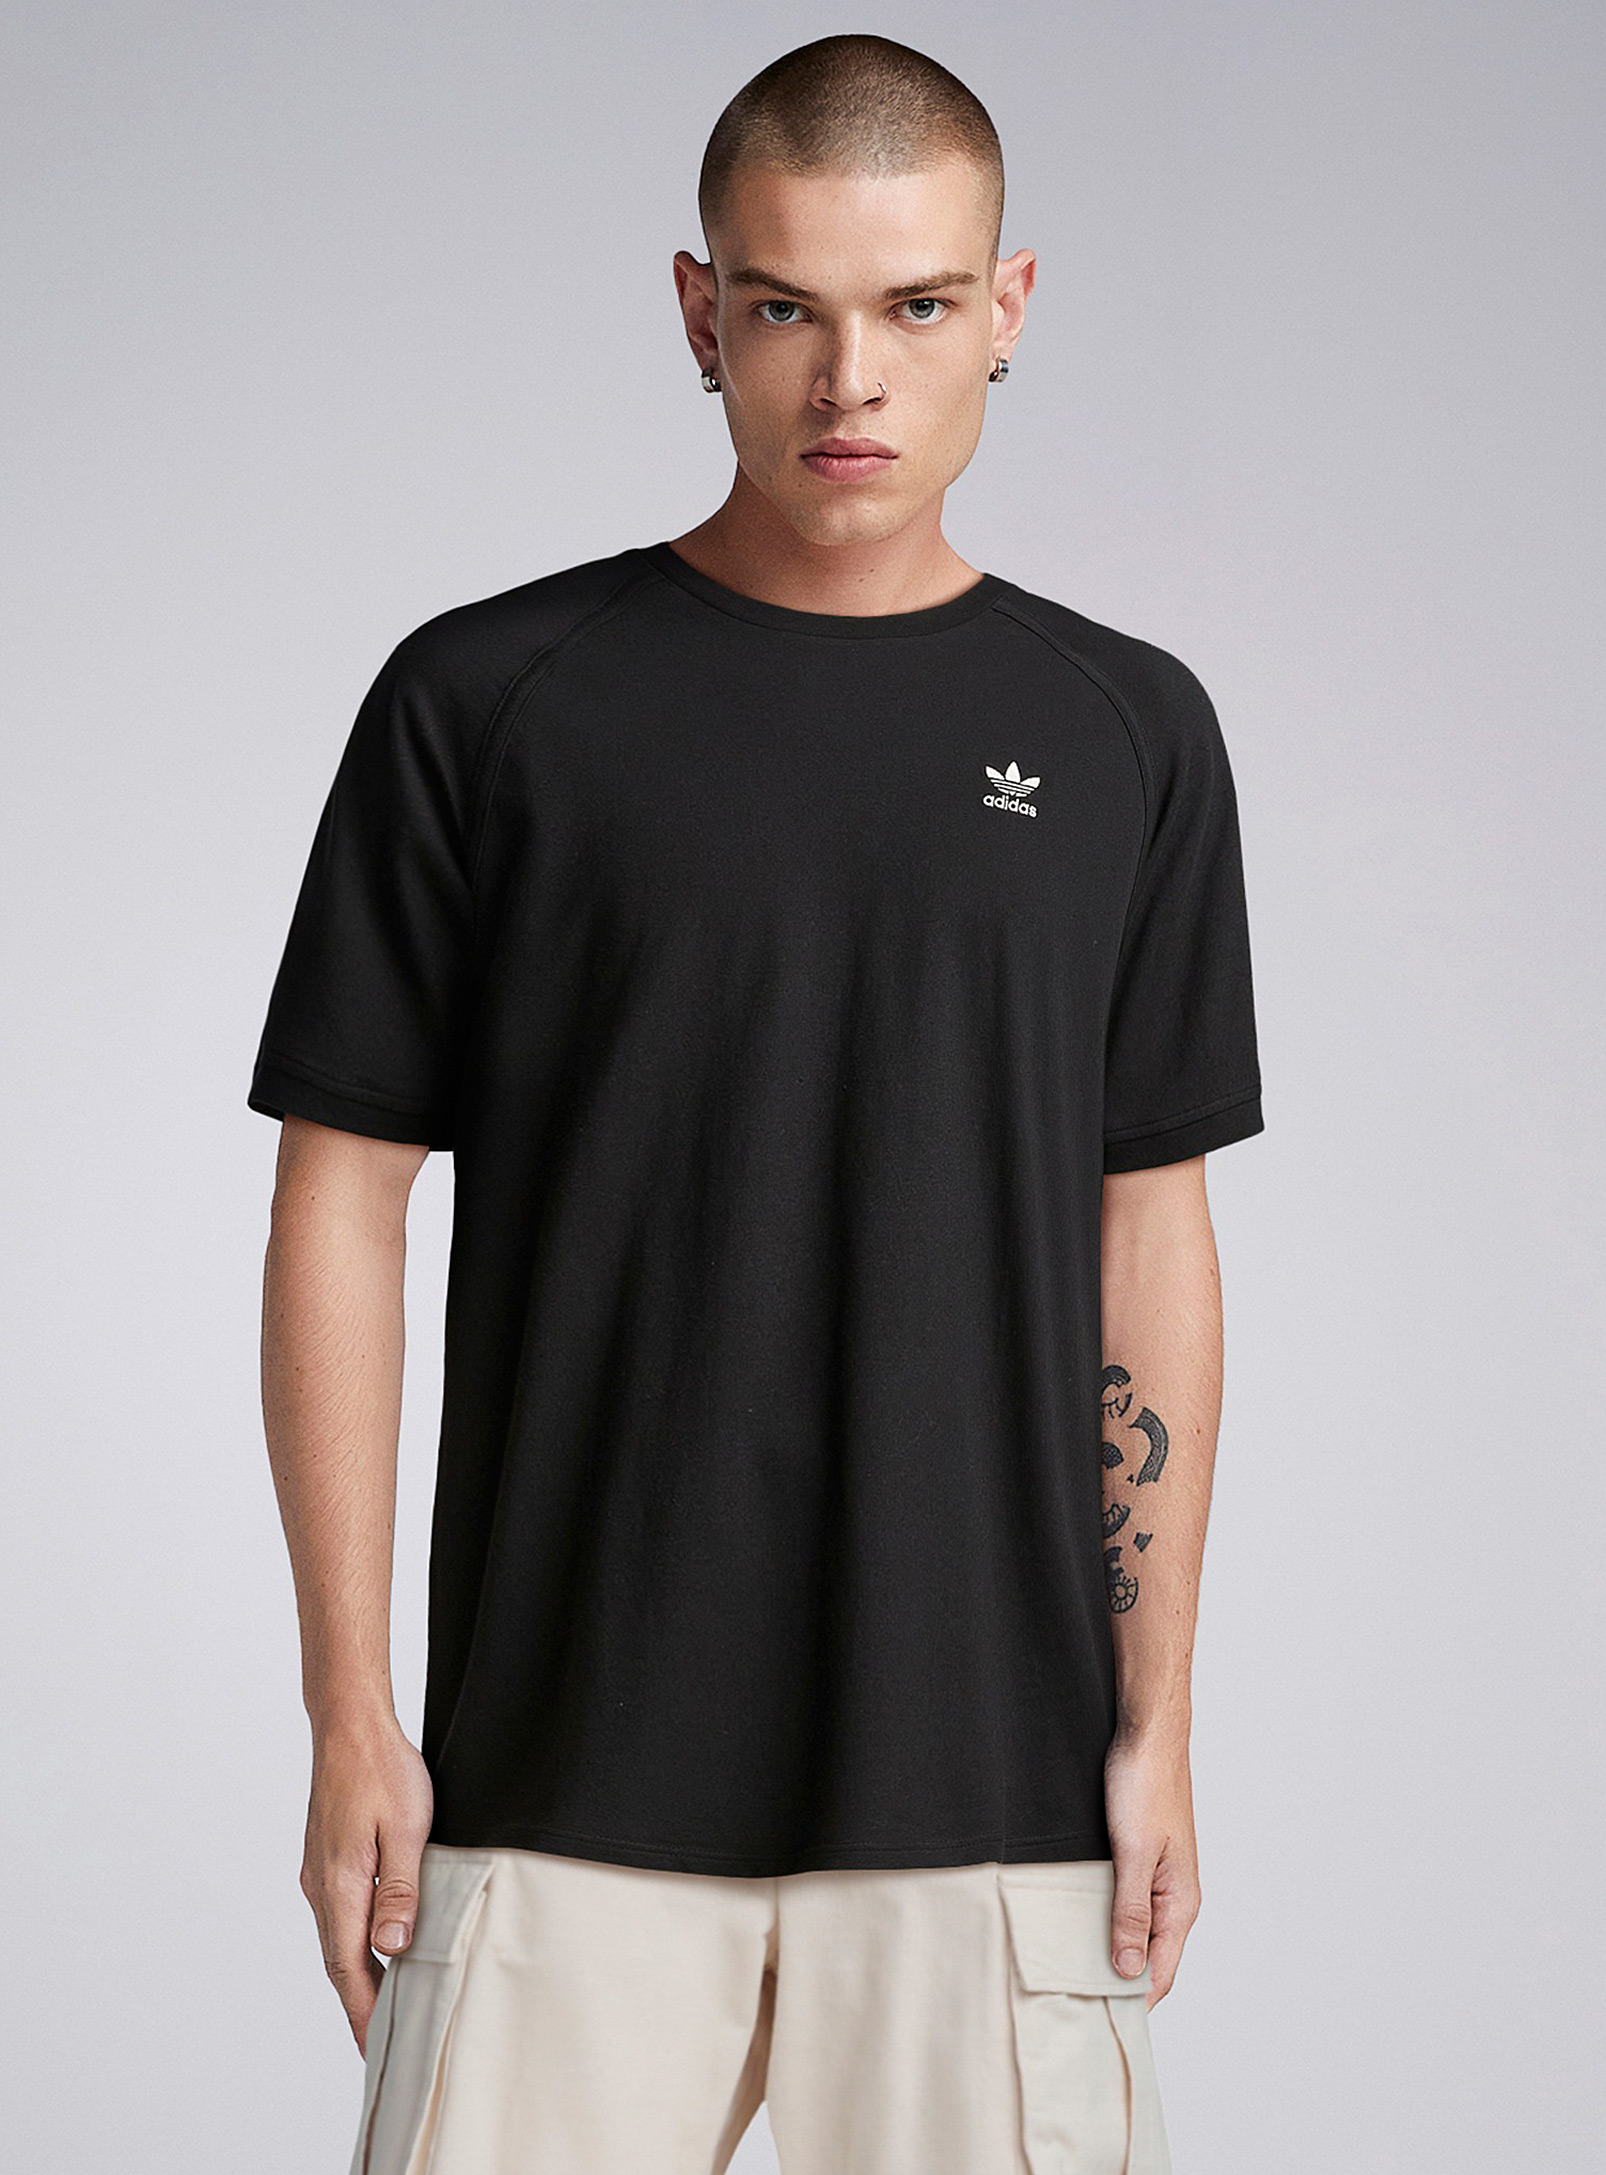 Adidas - Men's Trefoil logo raglan T-shirt